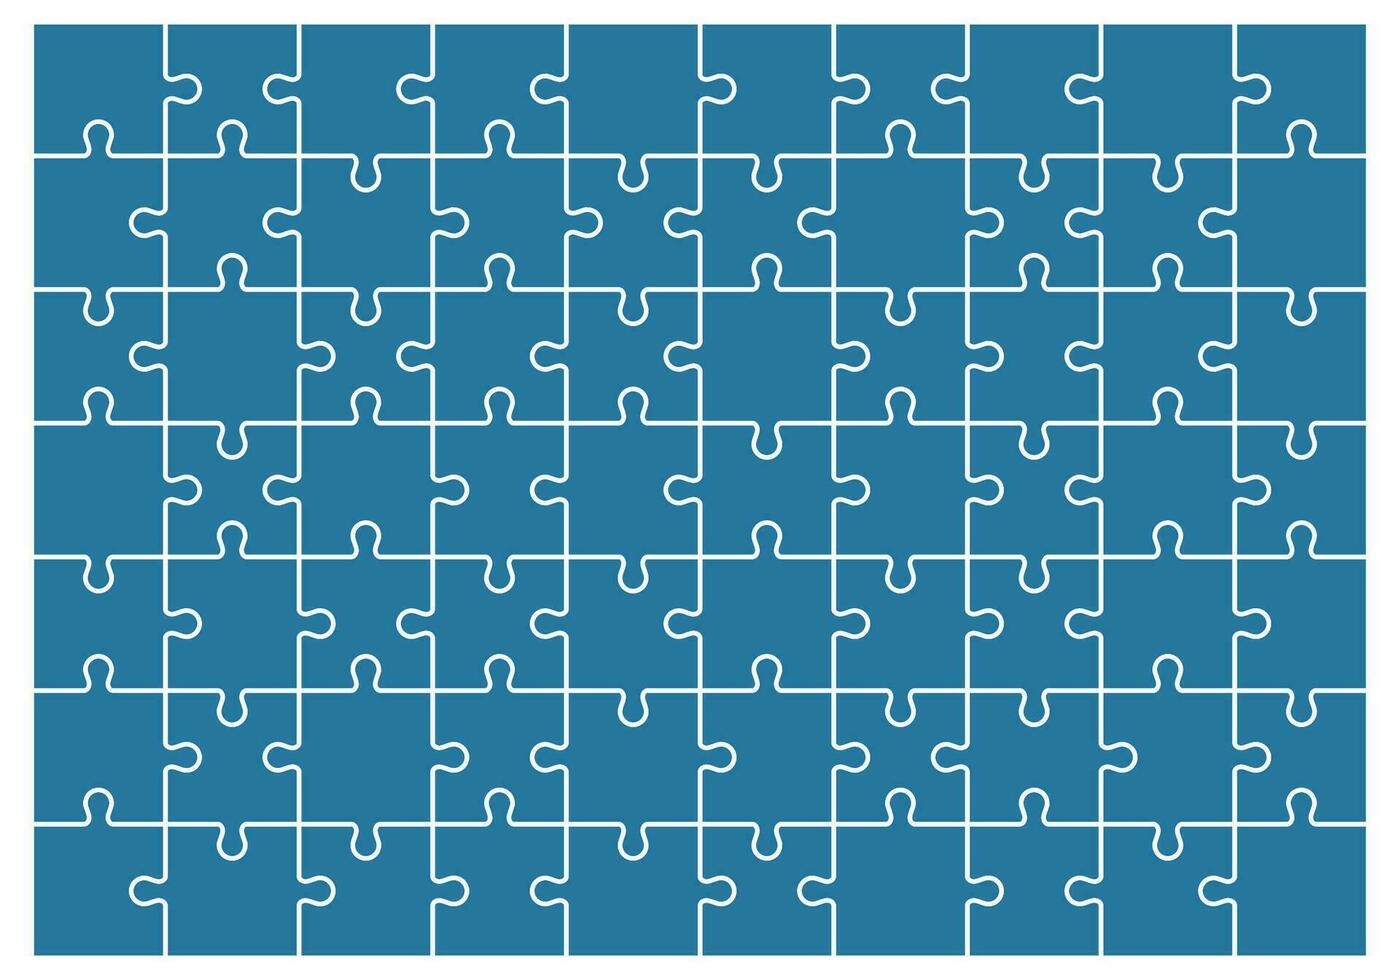 Puzzles Rätsel einfach Muster, klassisch Rätsel Spiel Element oder Mosaik Teil Verbindung. Vektor Illustration.